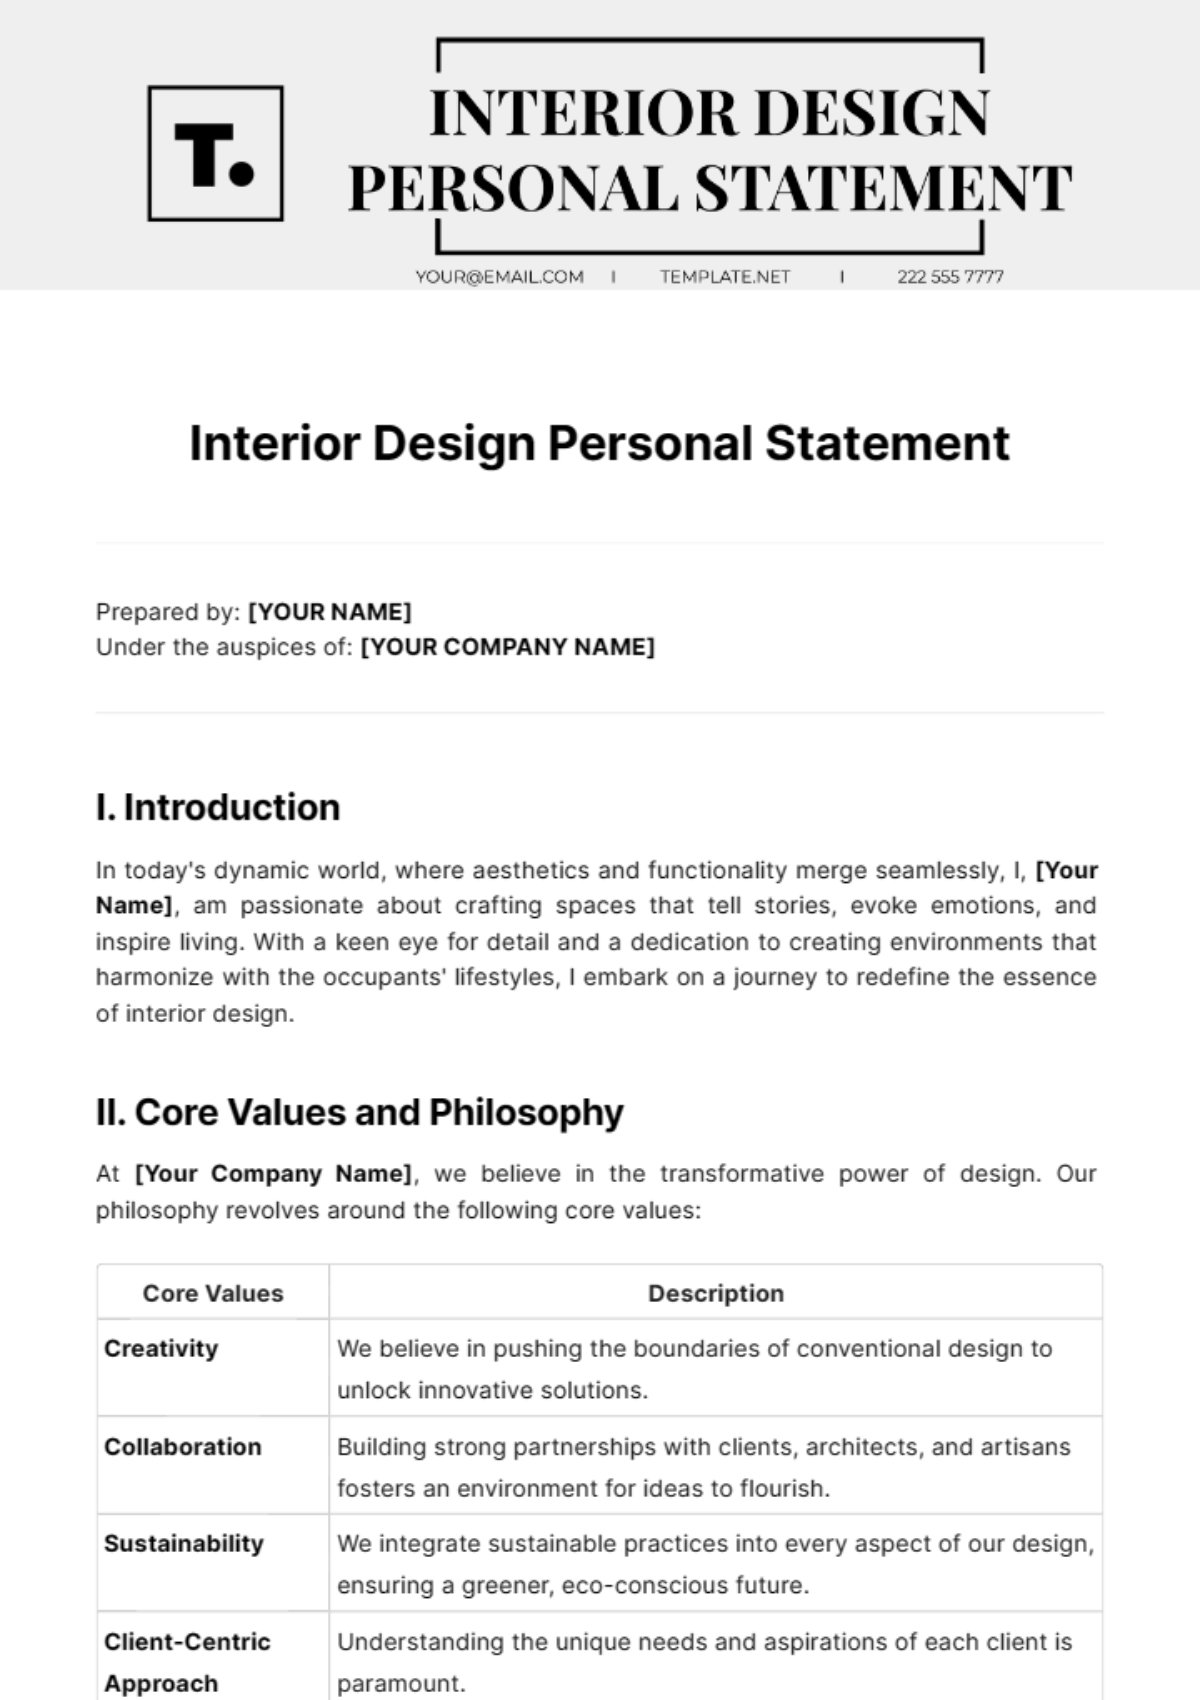 Interior Design Personal Statement Template